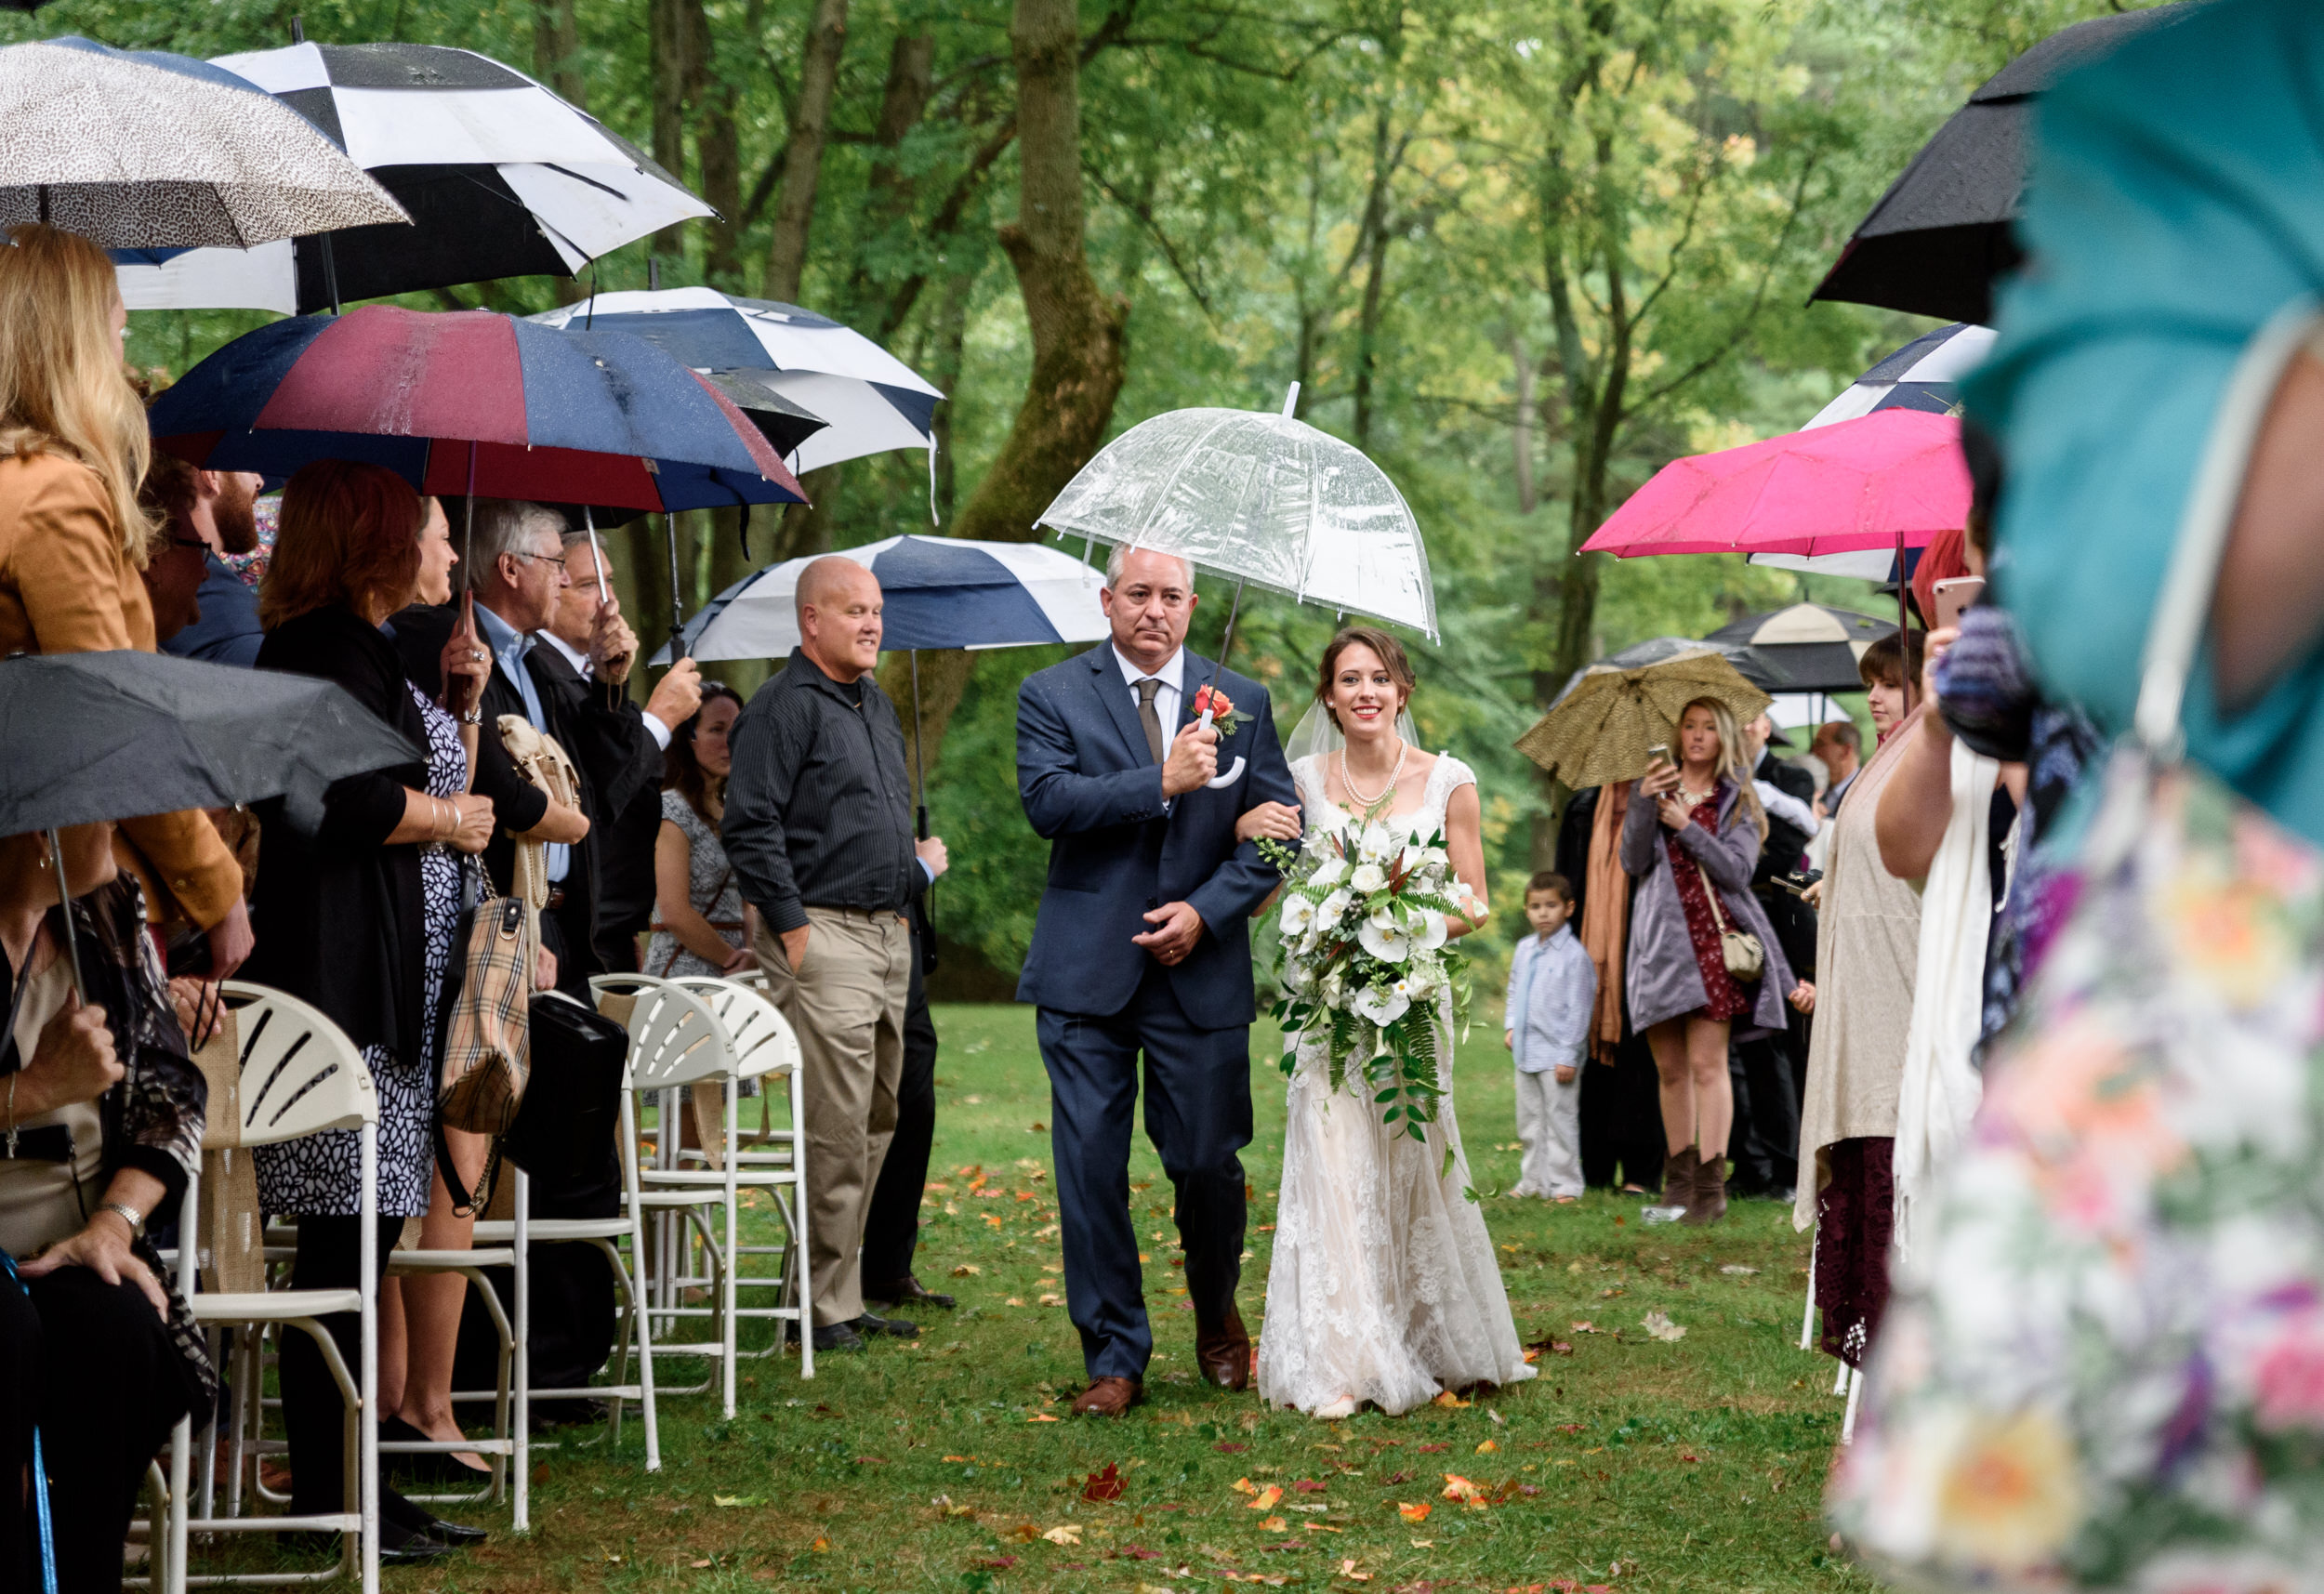 Wedding ceremony in Bucks County - Philadelphia wedding photographer